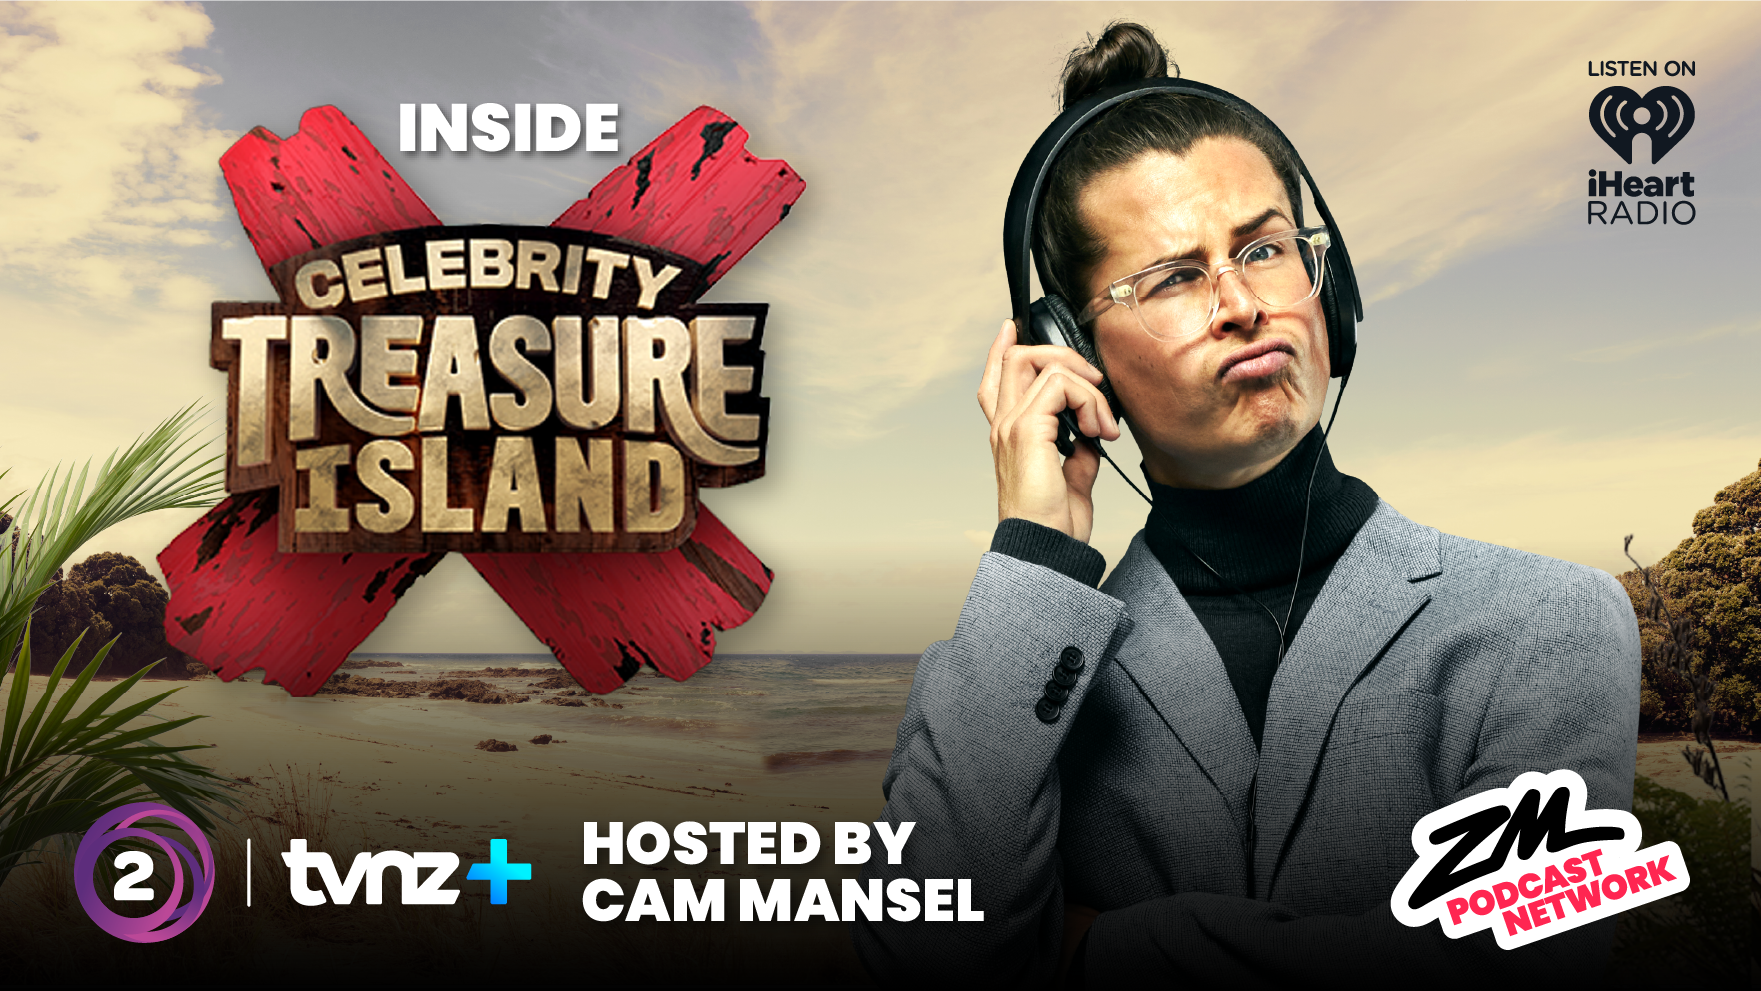 Inside Celebrity Treasure Island with Cam Mansel